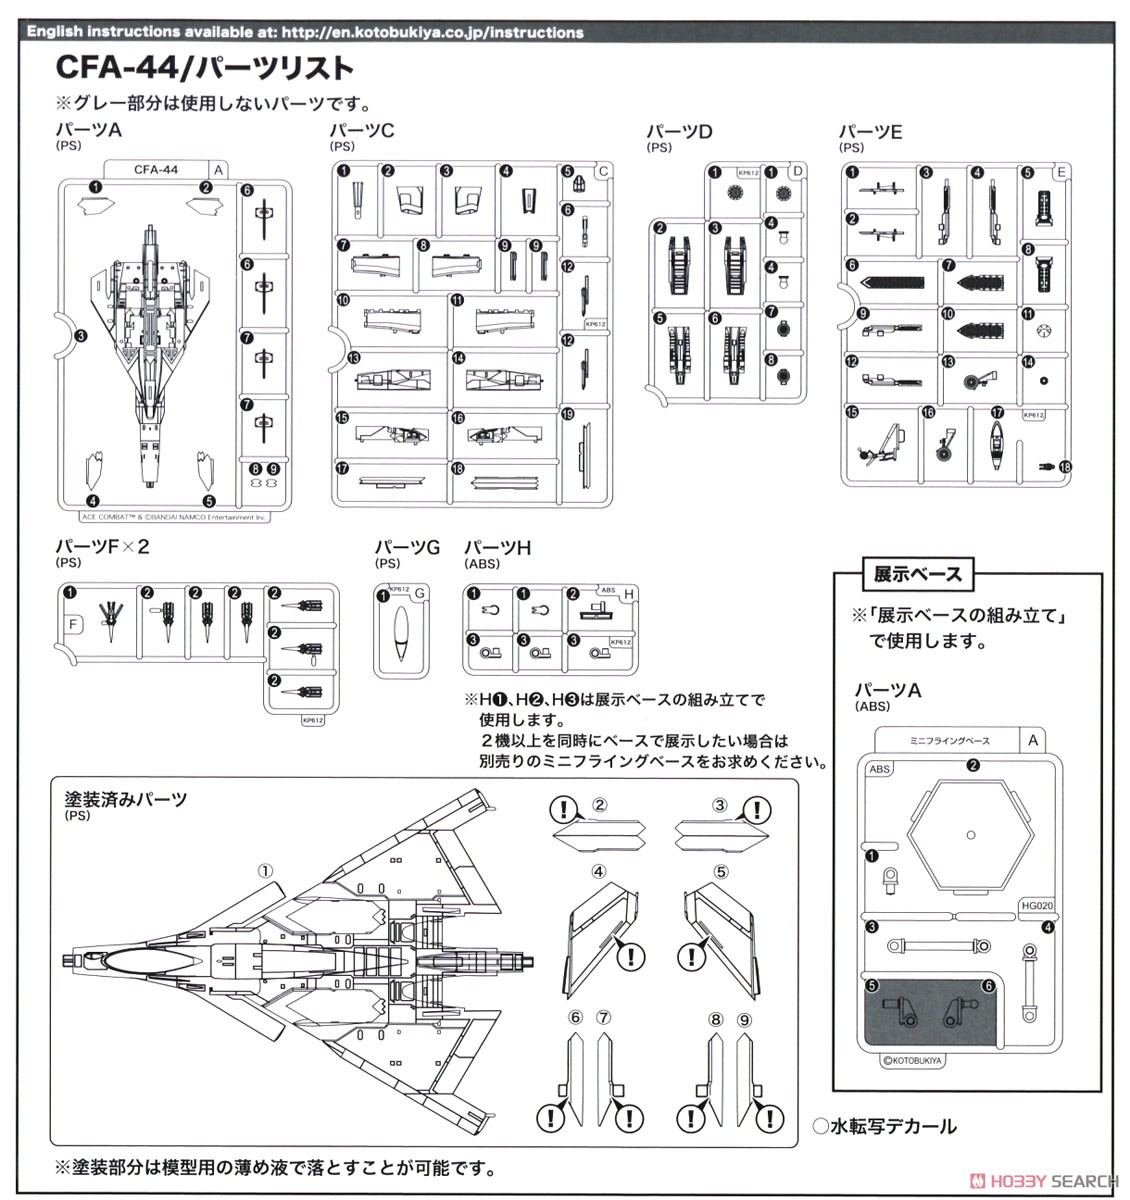 CFA-44 (Plastic model) Assembly guide7